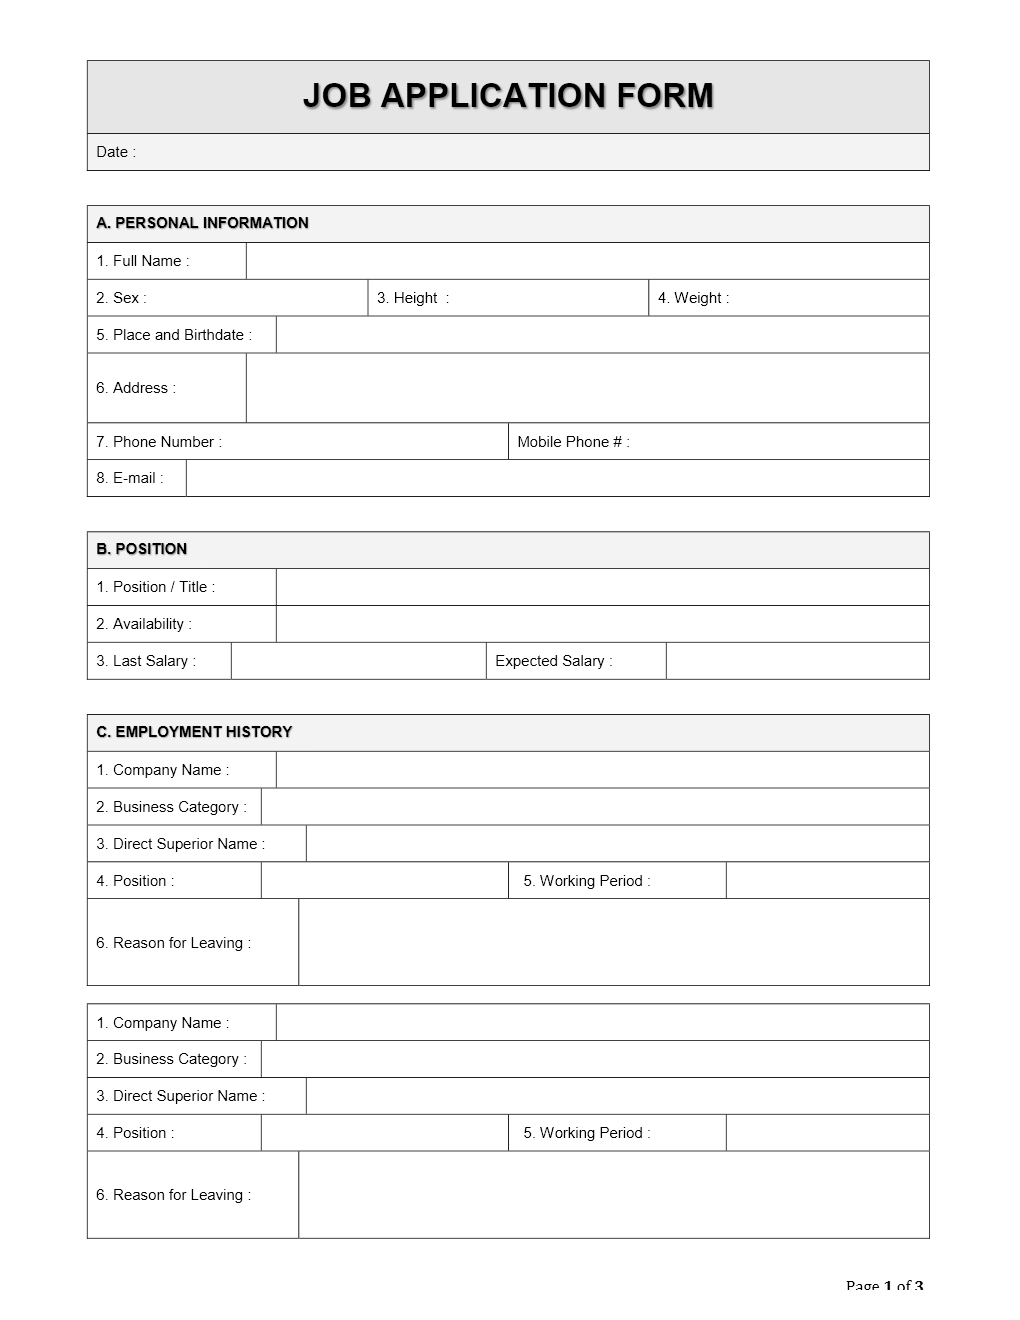 job-application-template-word-document